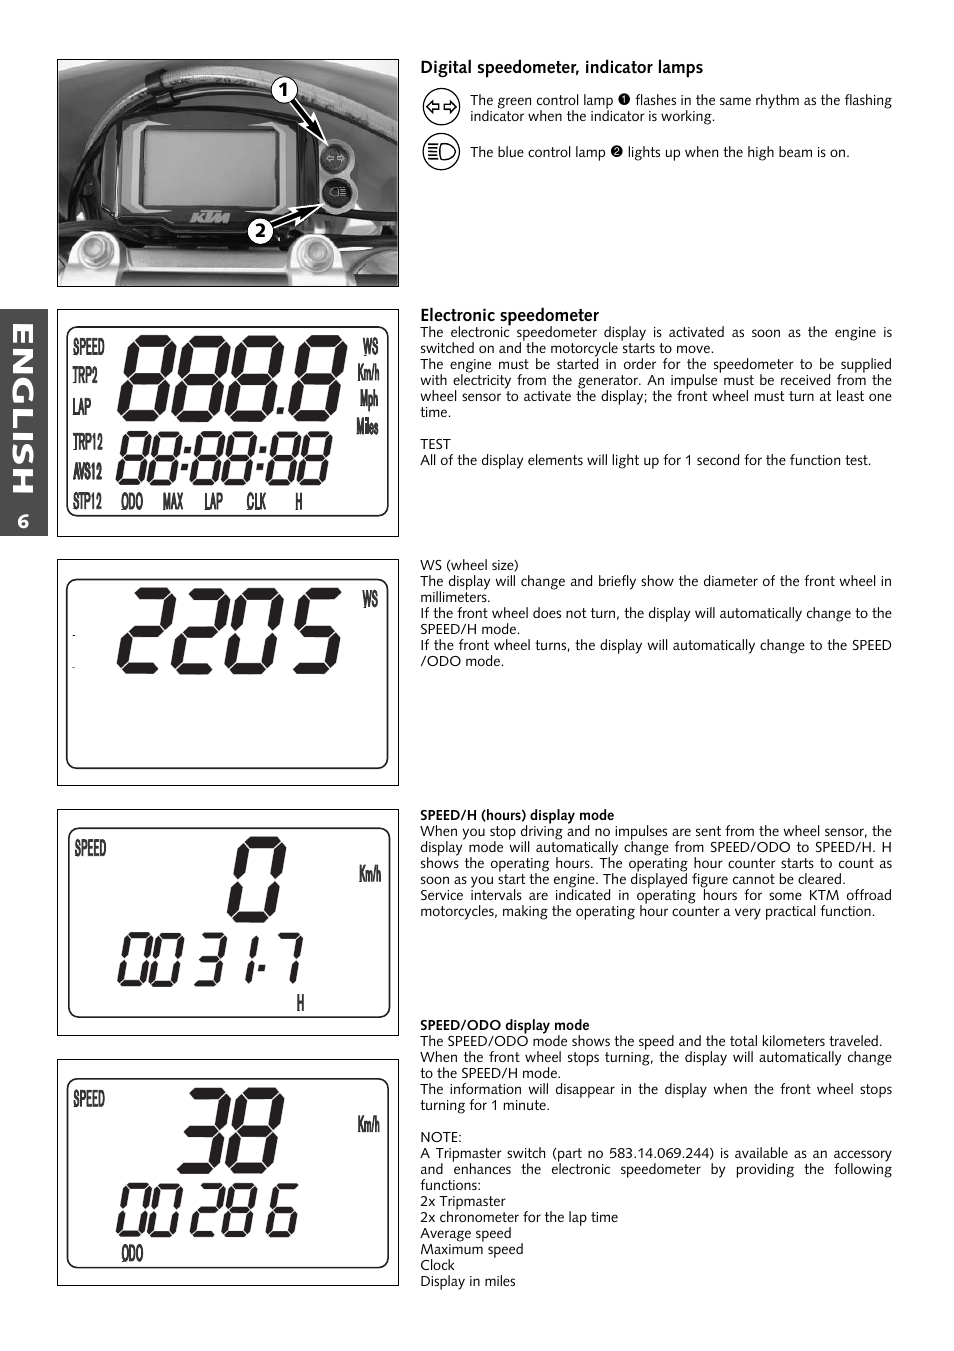 English | KTM 250 EXC RACING User Manual | Page 7 / 62